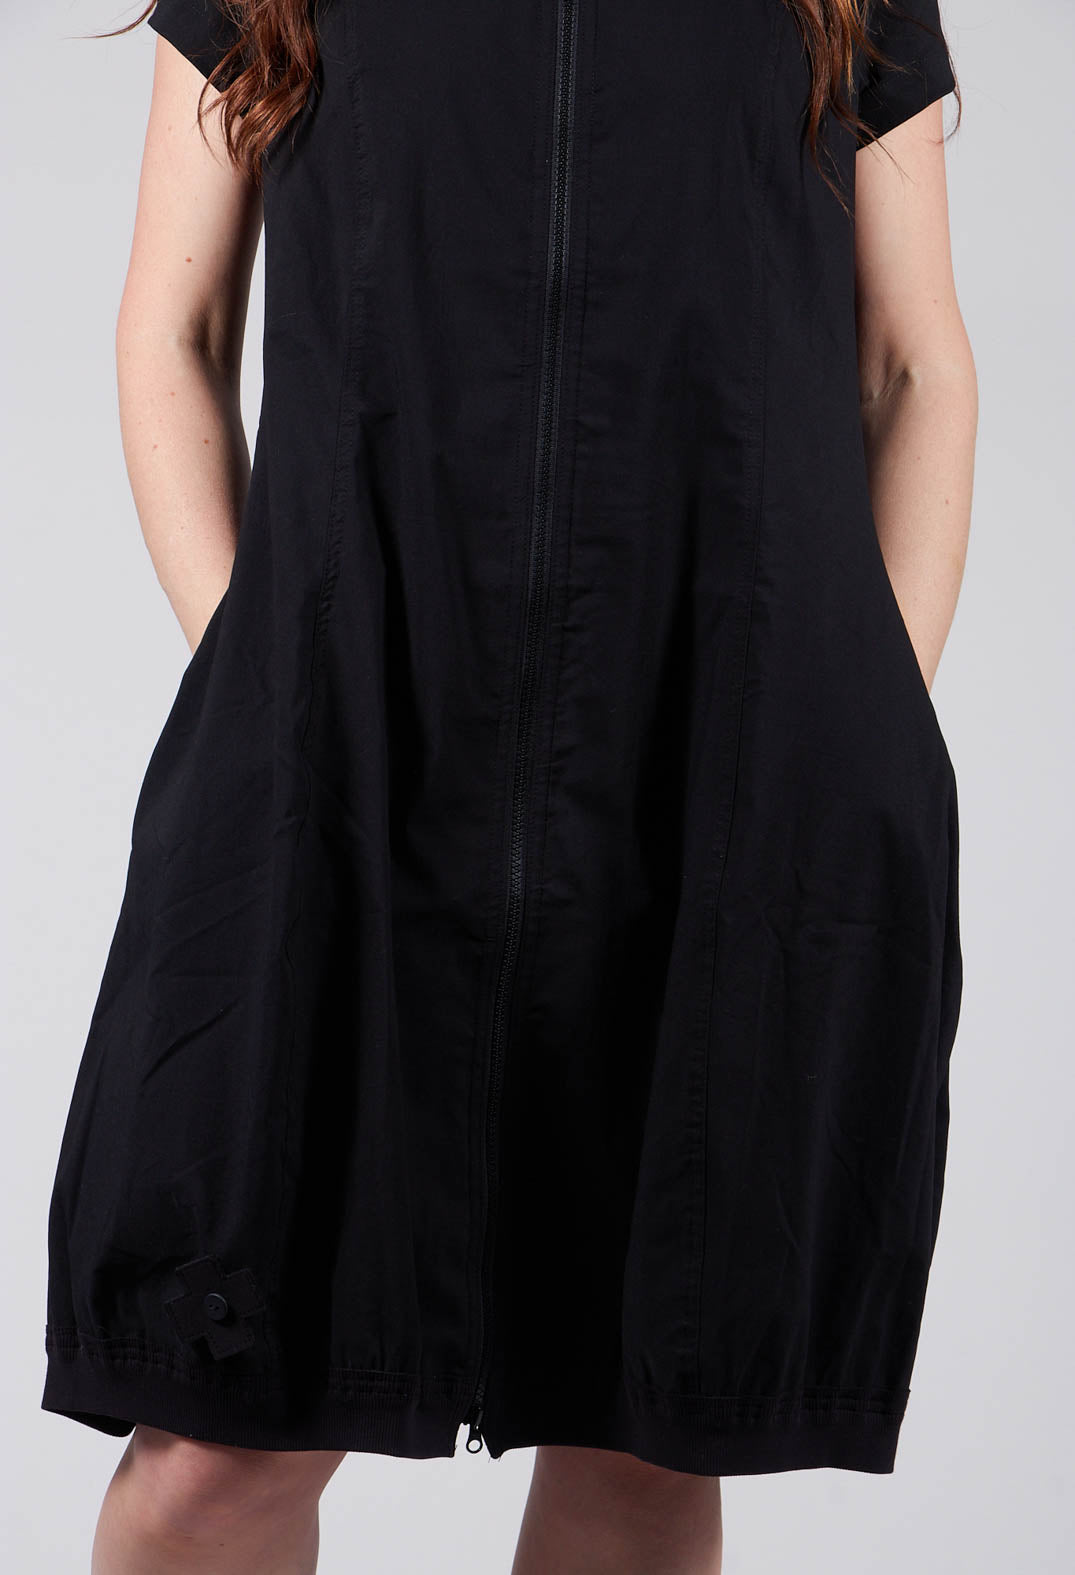 A Zip Dress in Black